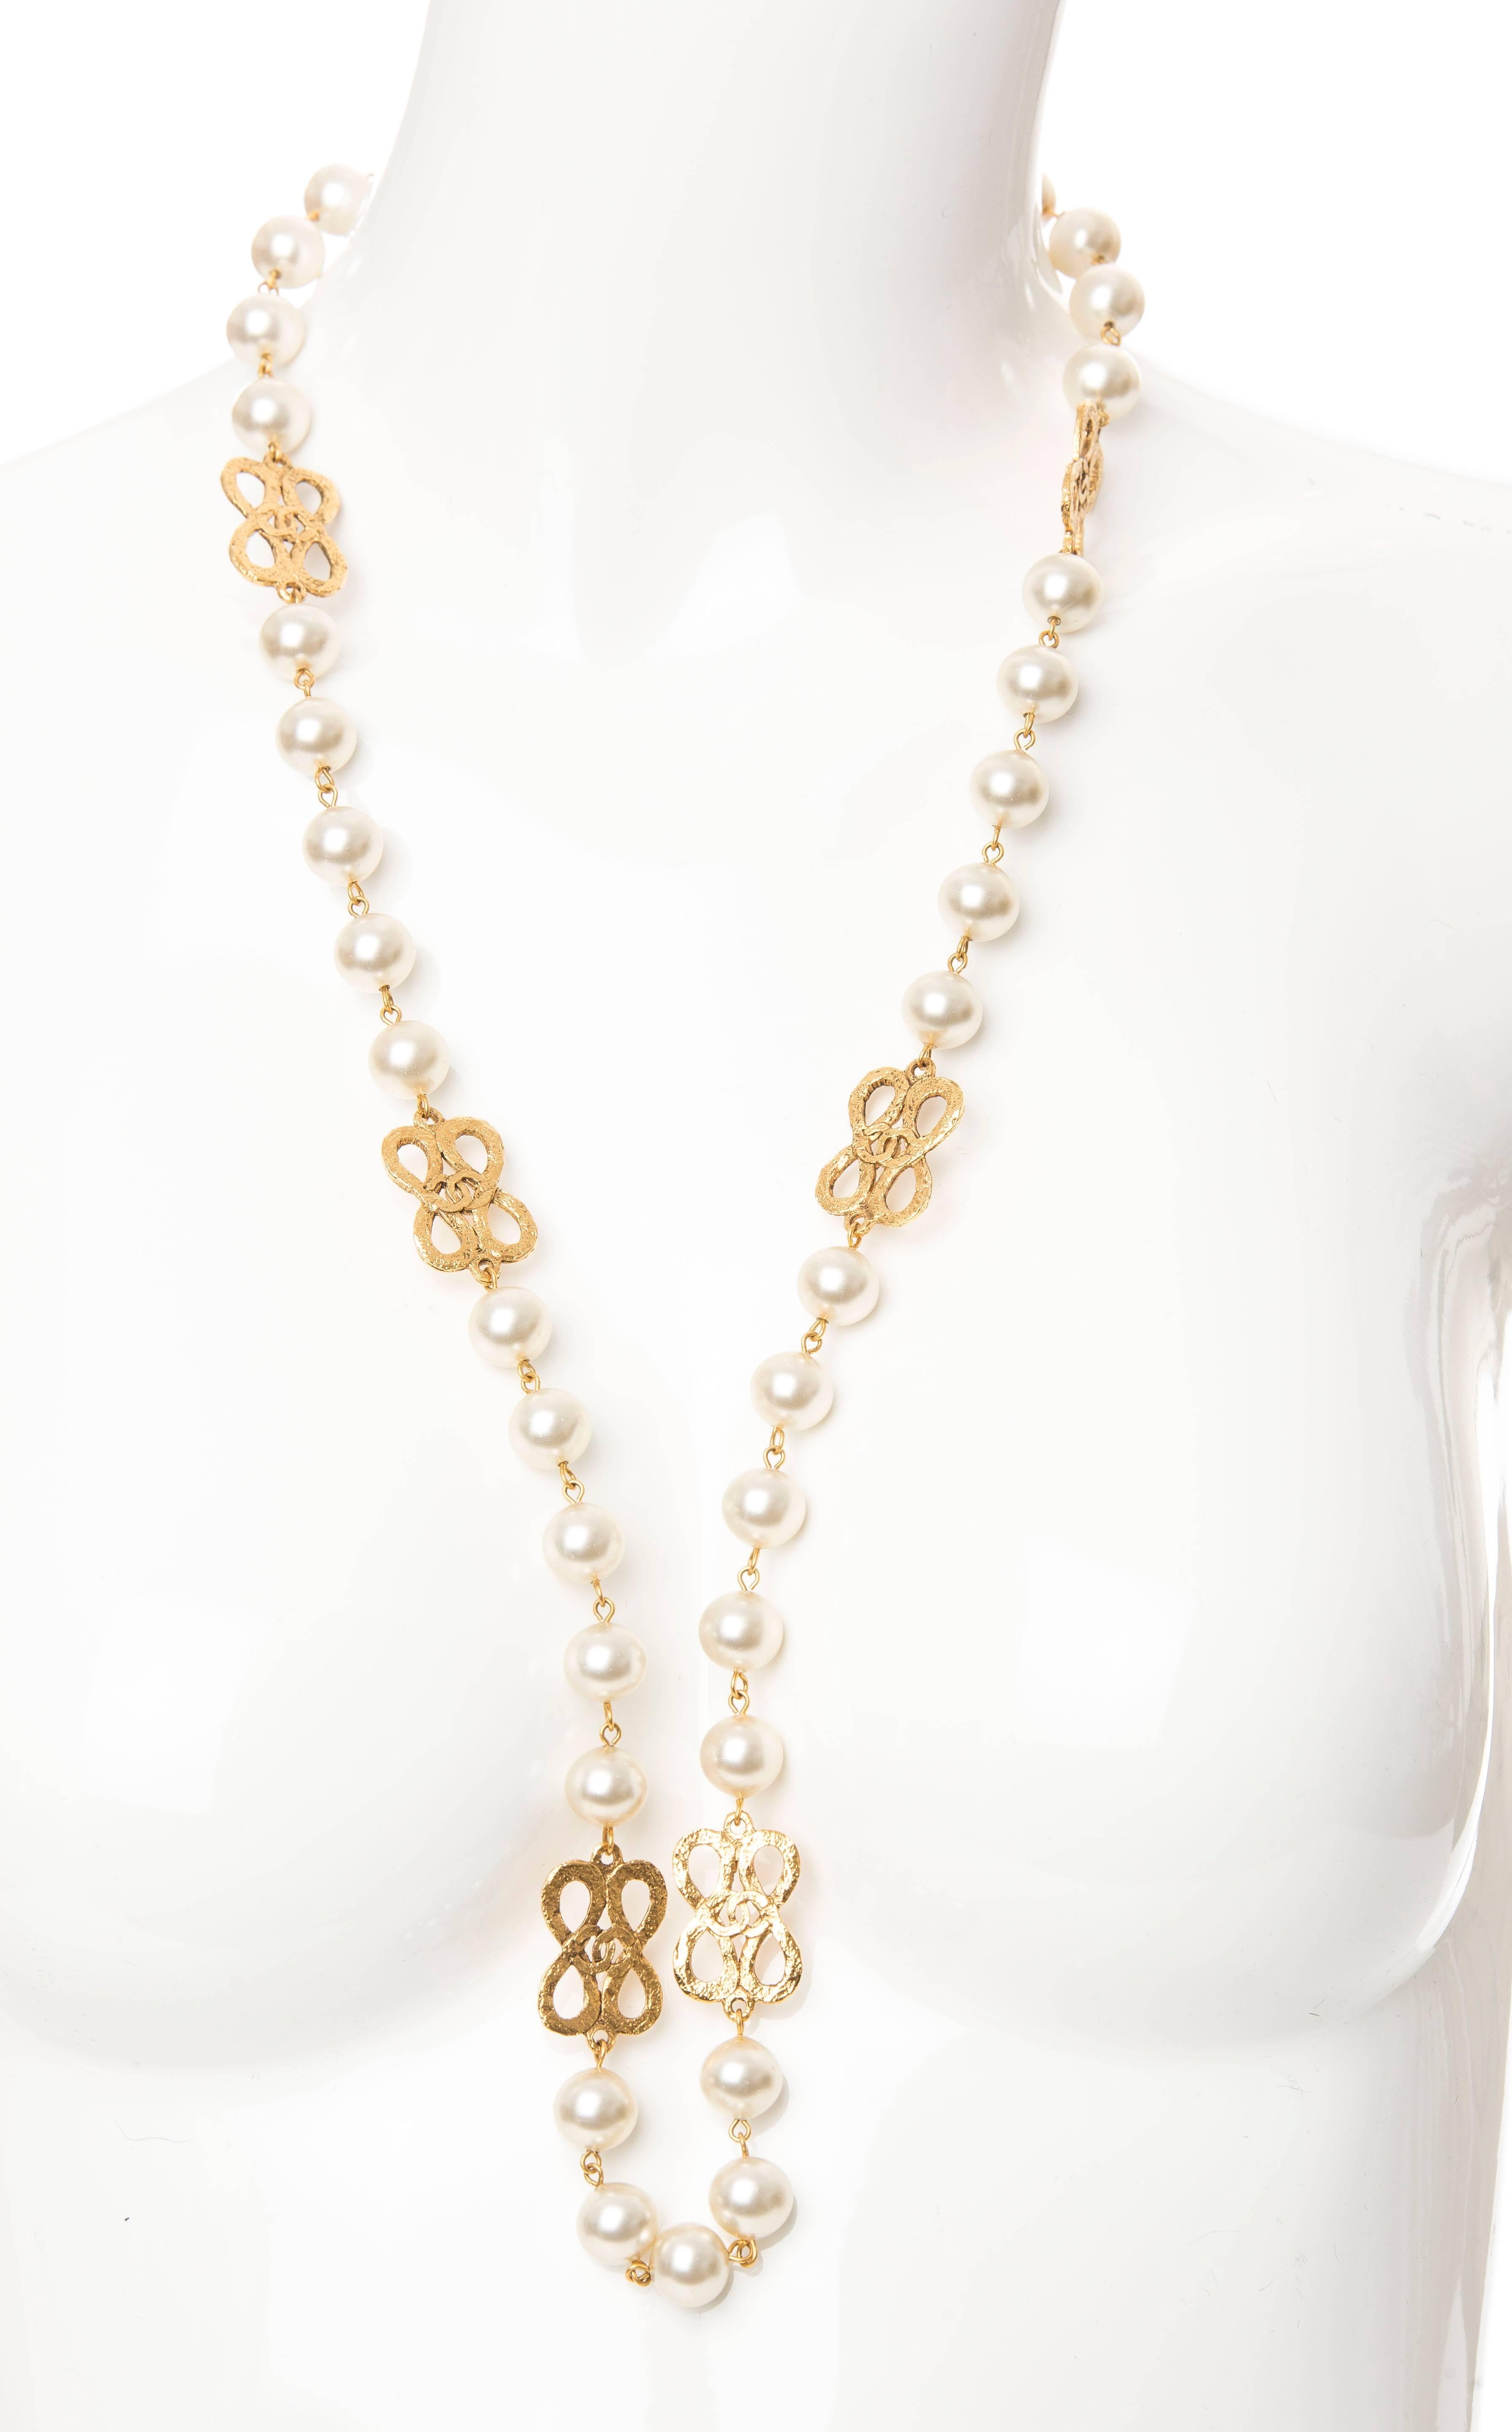 Chanel pearls, circa 1980's with gold-tone CC pendants.